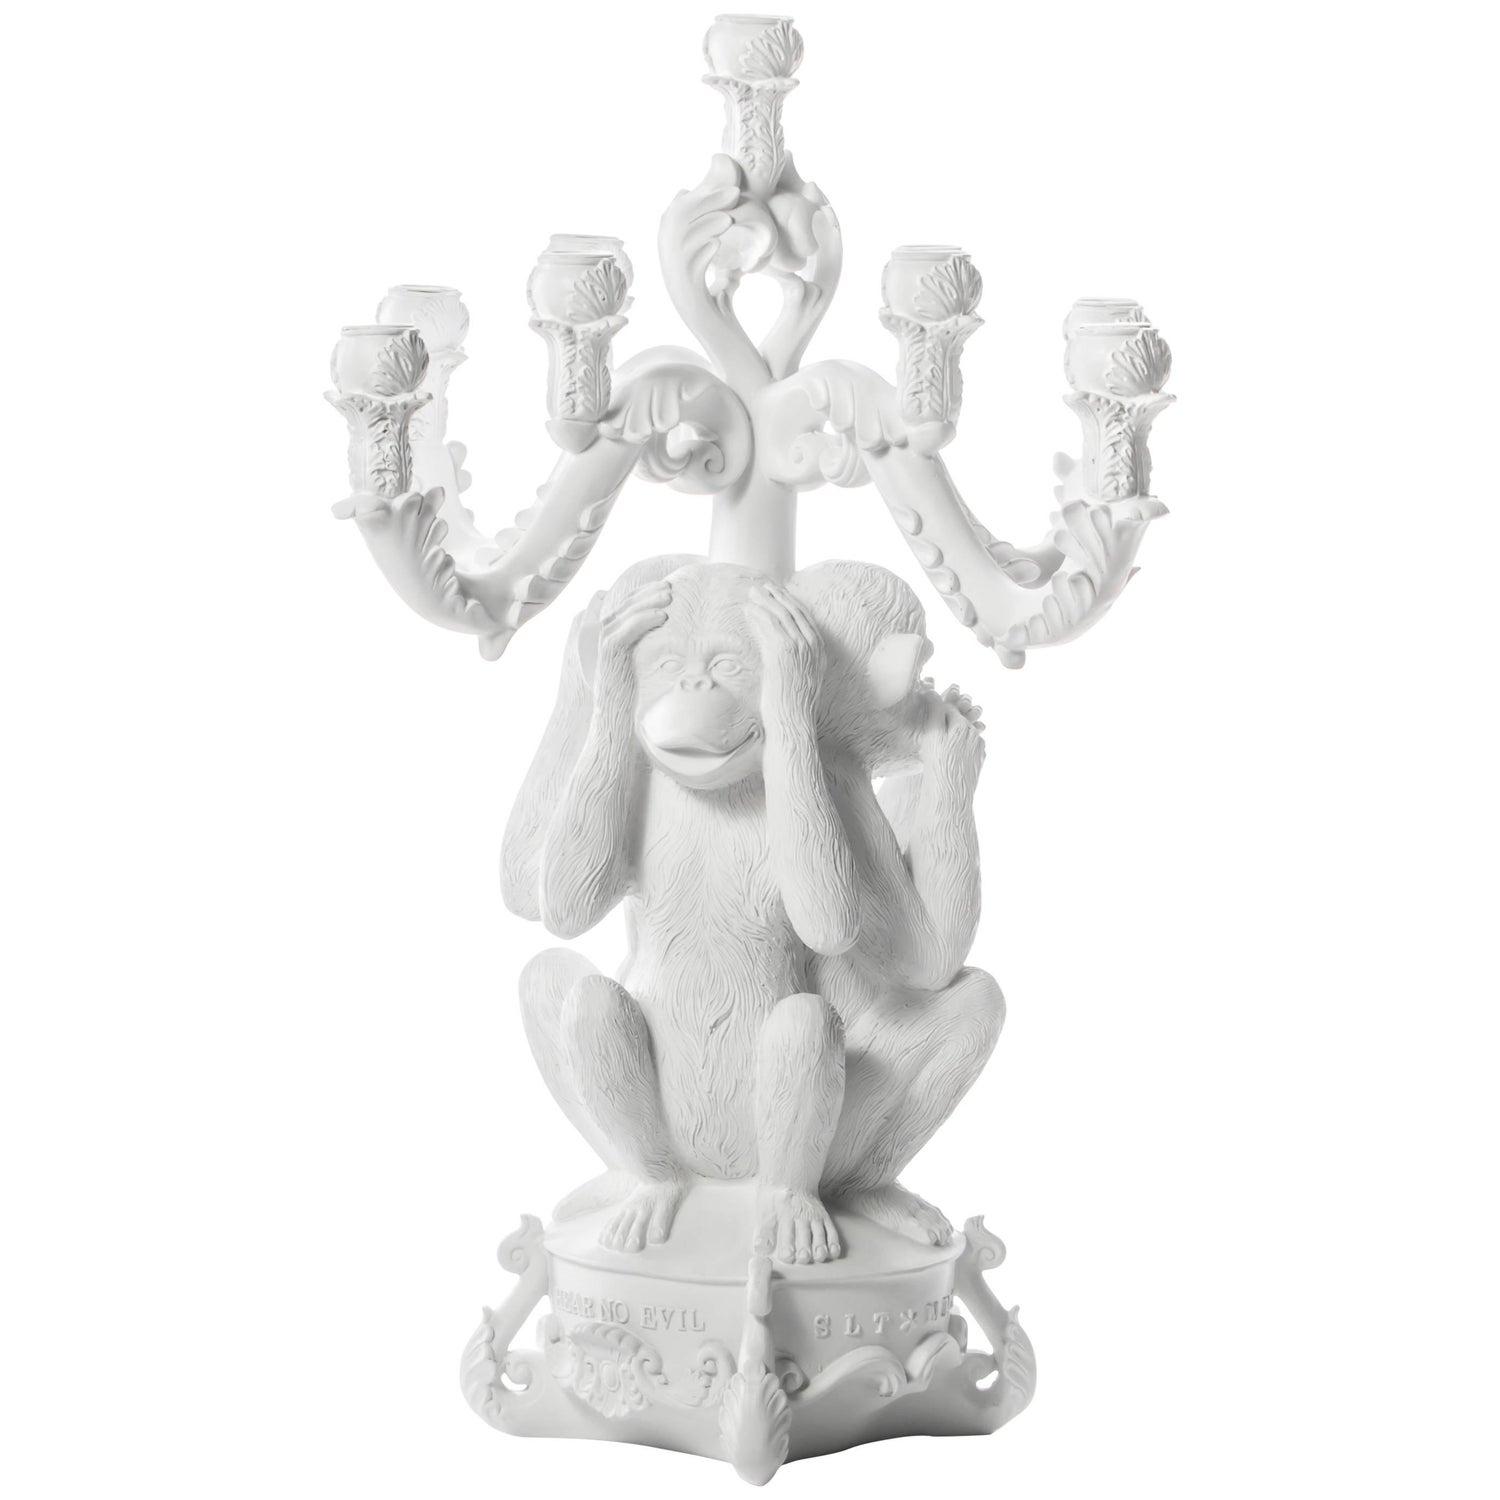 Seletti Burlesque The Wise Chimpanzee Candle Holder (48cm) - White